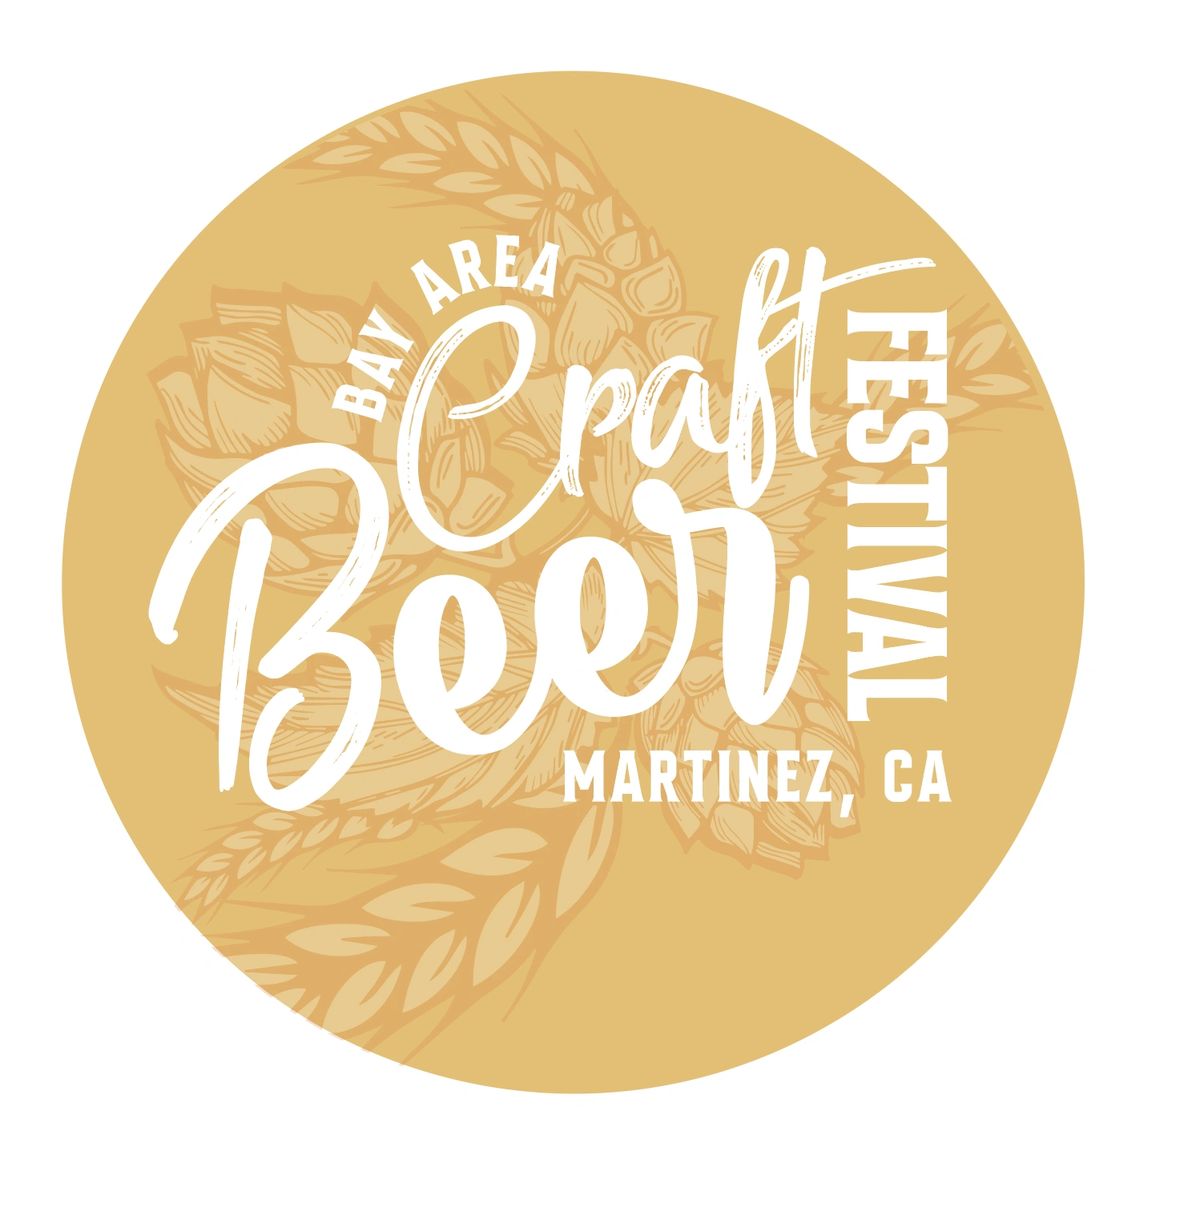 Bay Area Craft Beer Festival